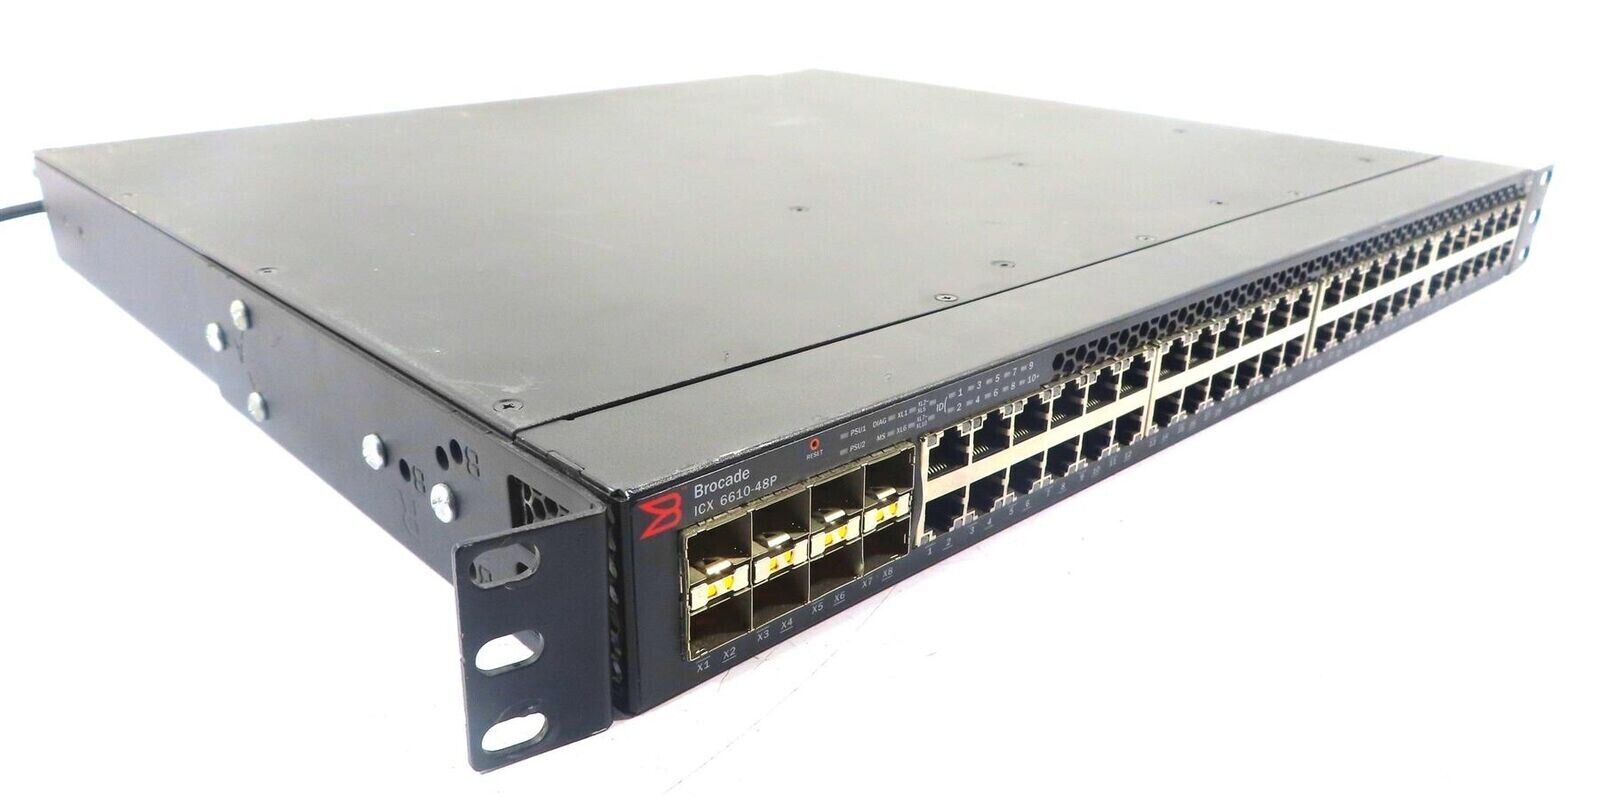 Brocade ICX6610-48P-E 48-port PoE+ Gigabit Ethernet Switch 8x 10GbE Dual PSU